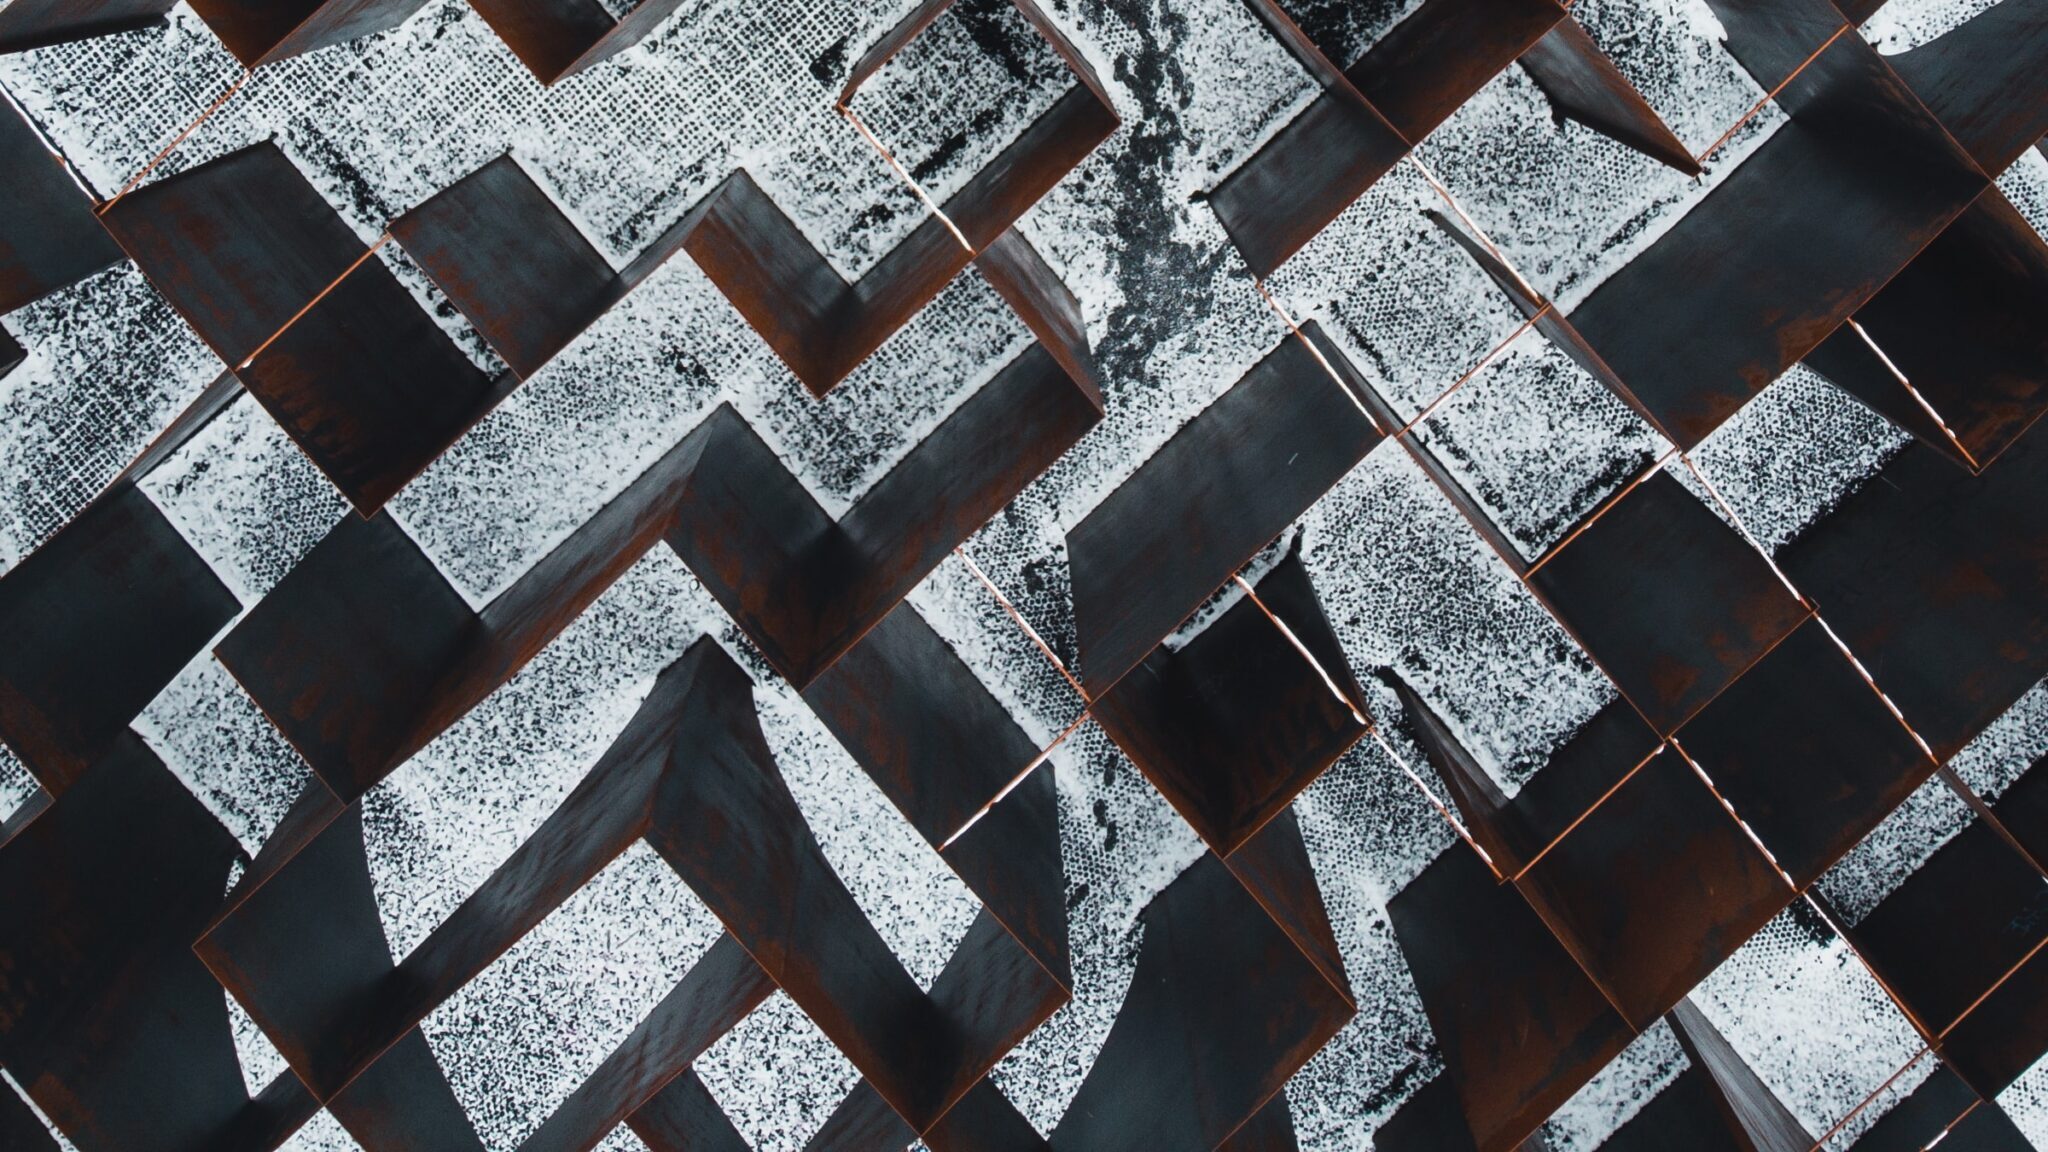 image of a maze